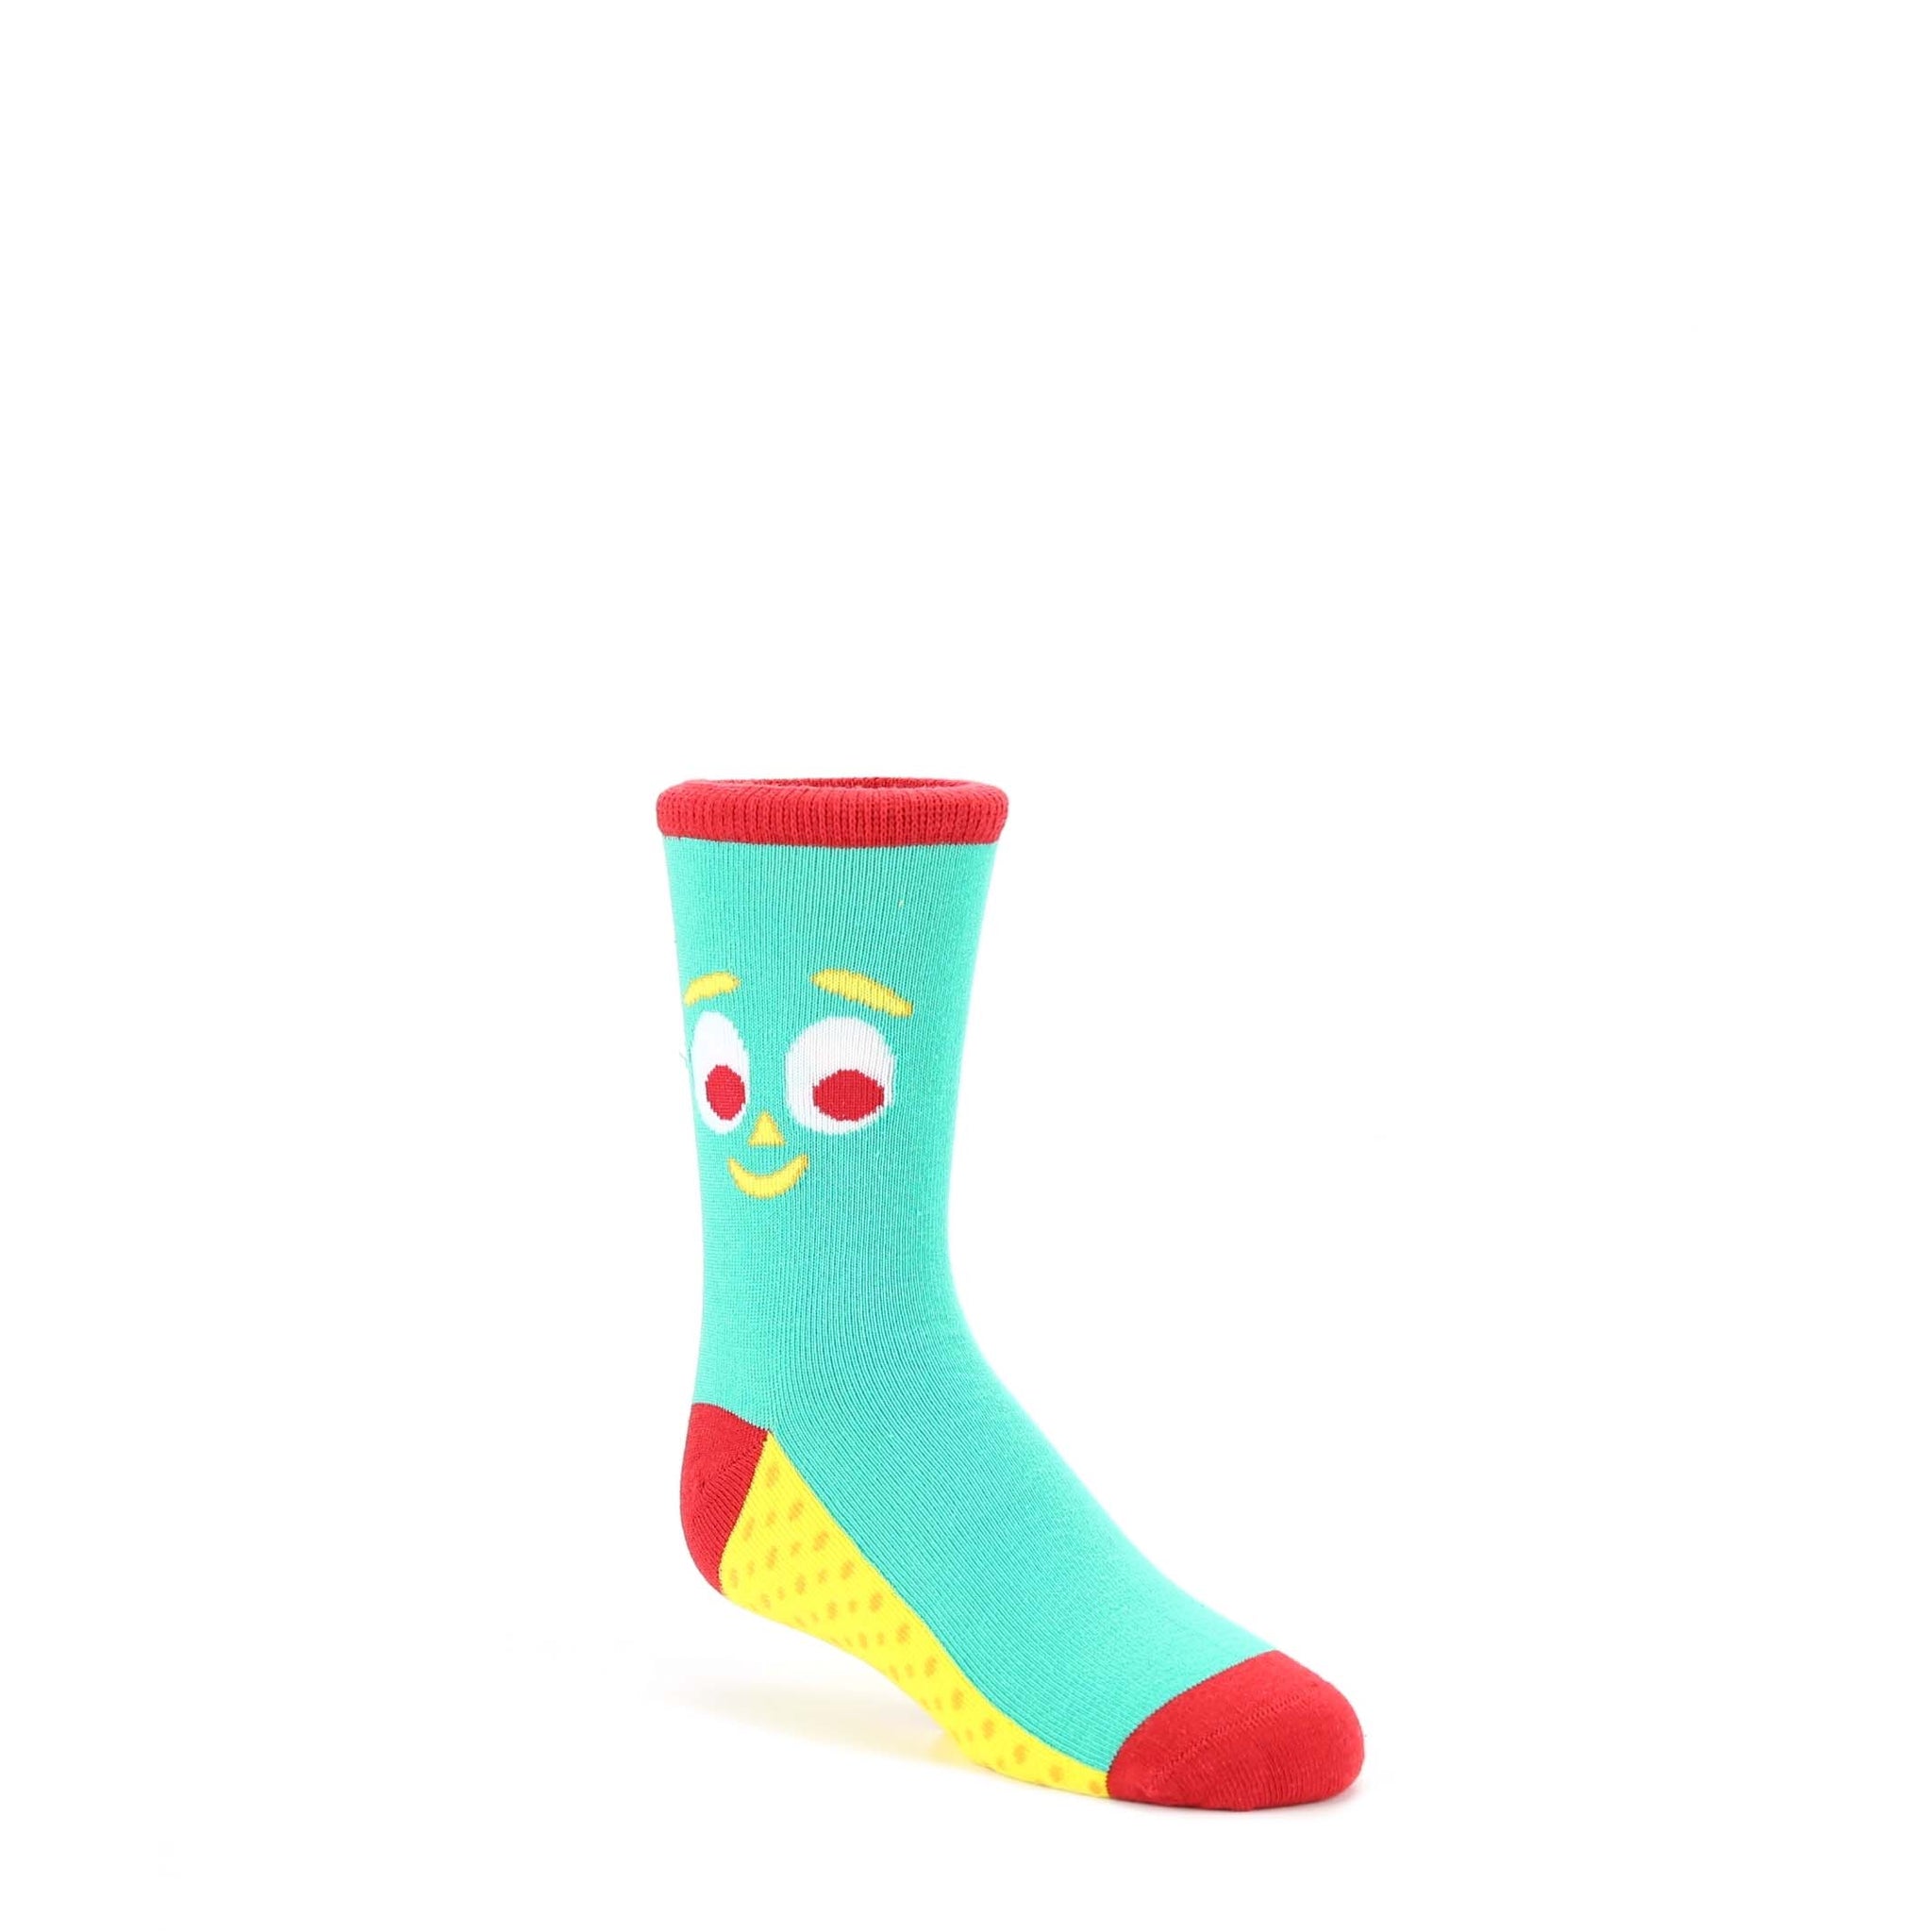 Gumby Kid's Dress Socks 3 Pairs